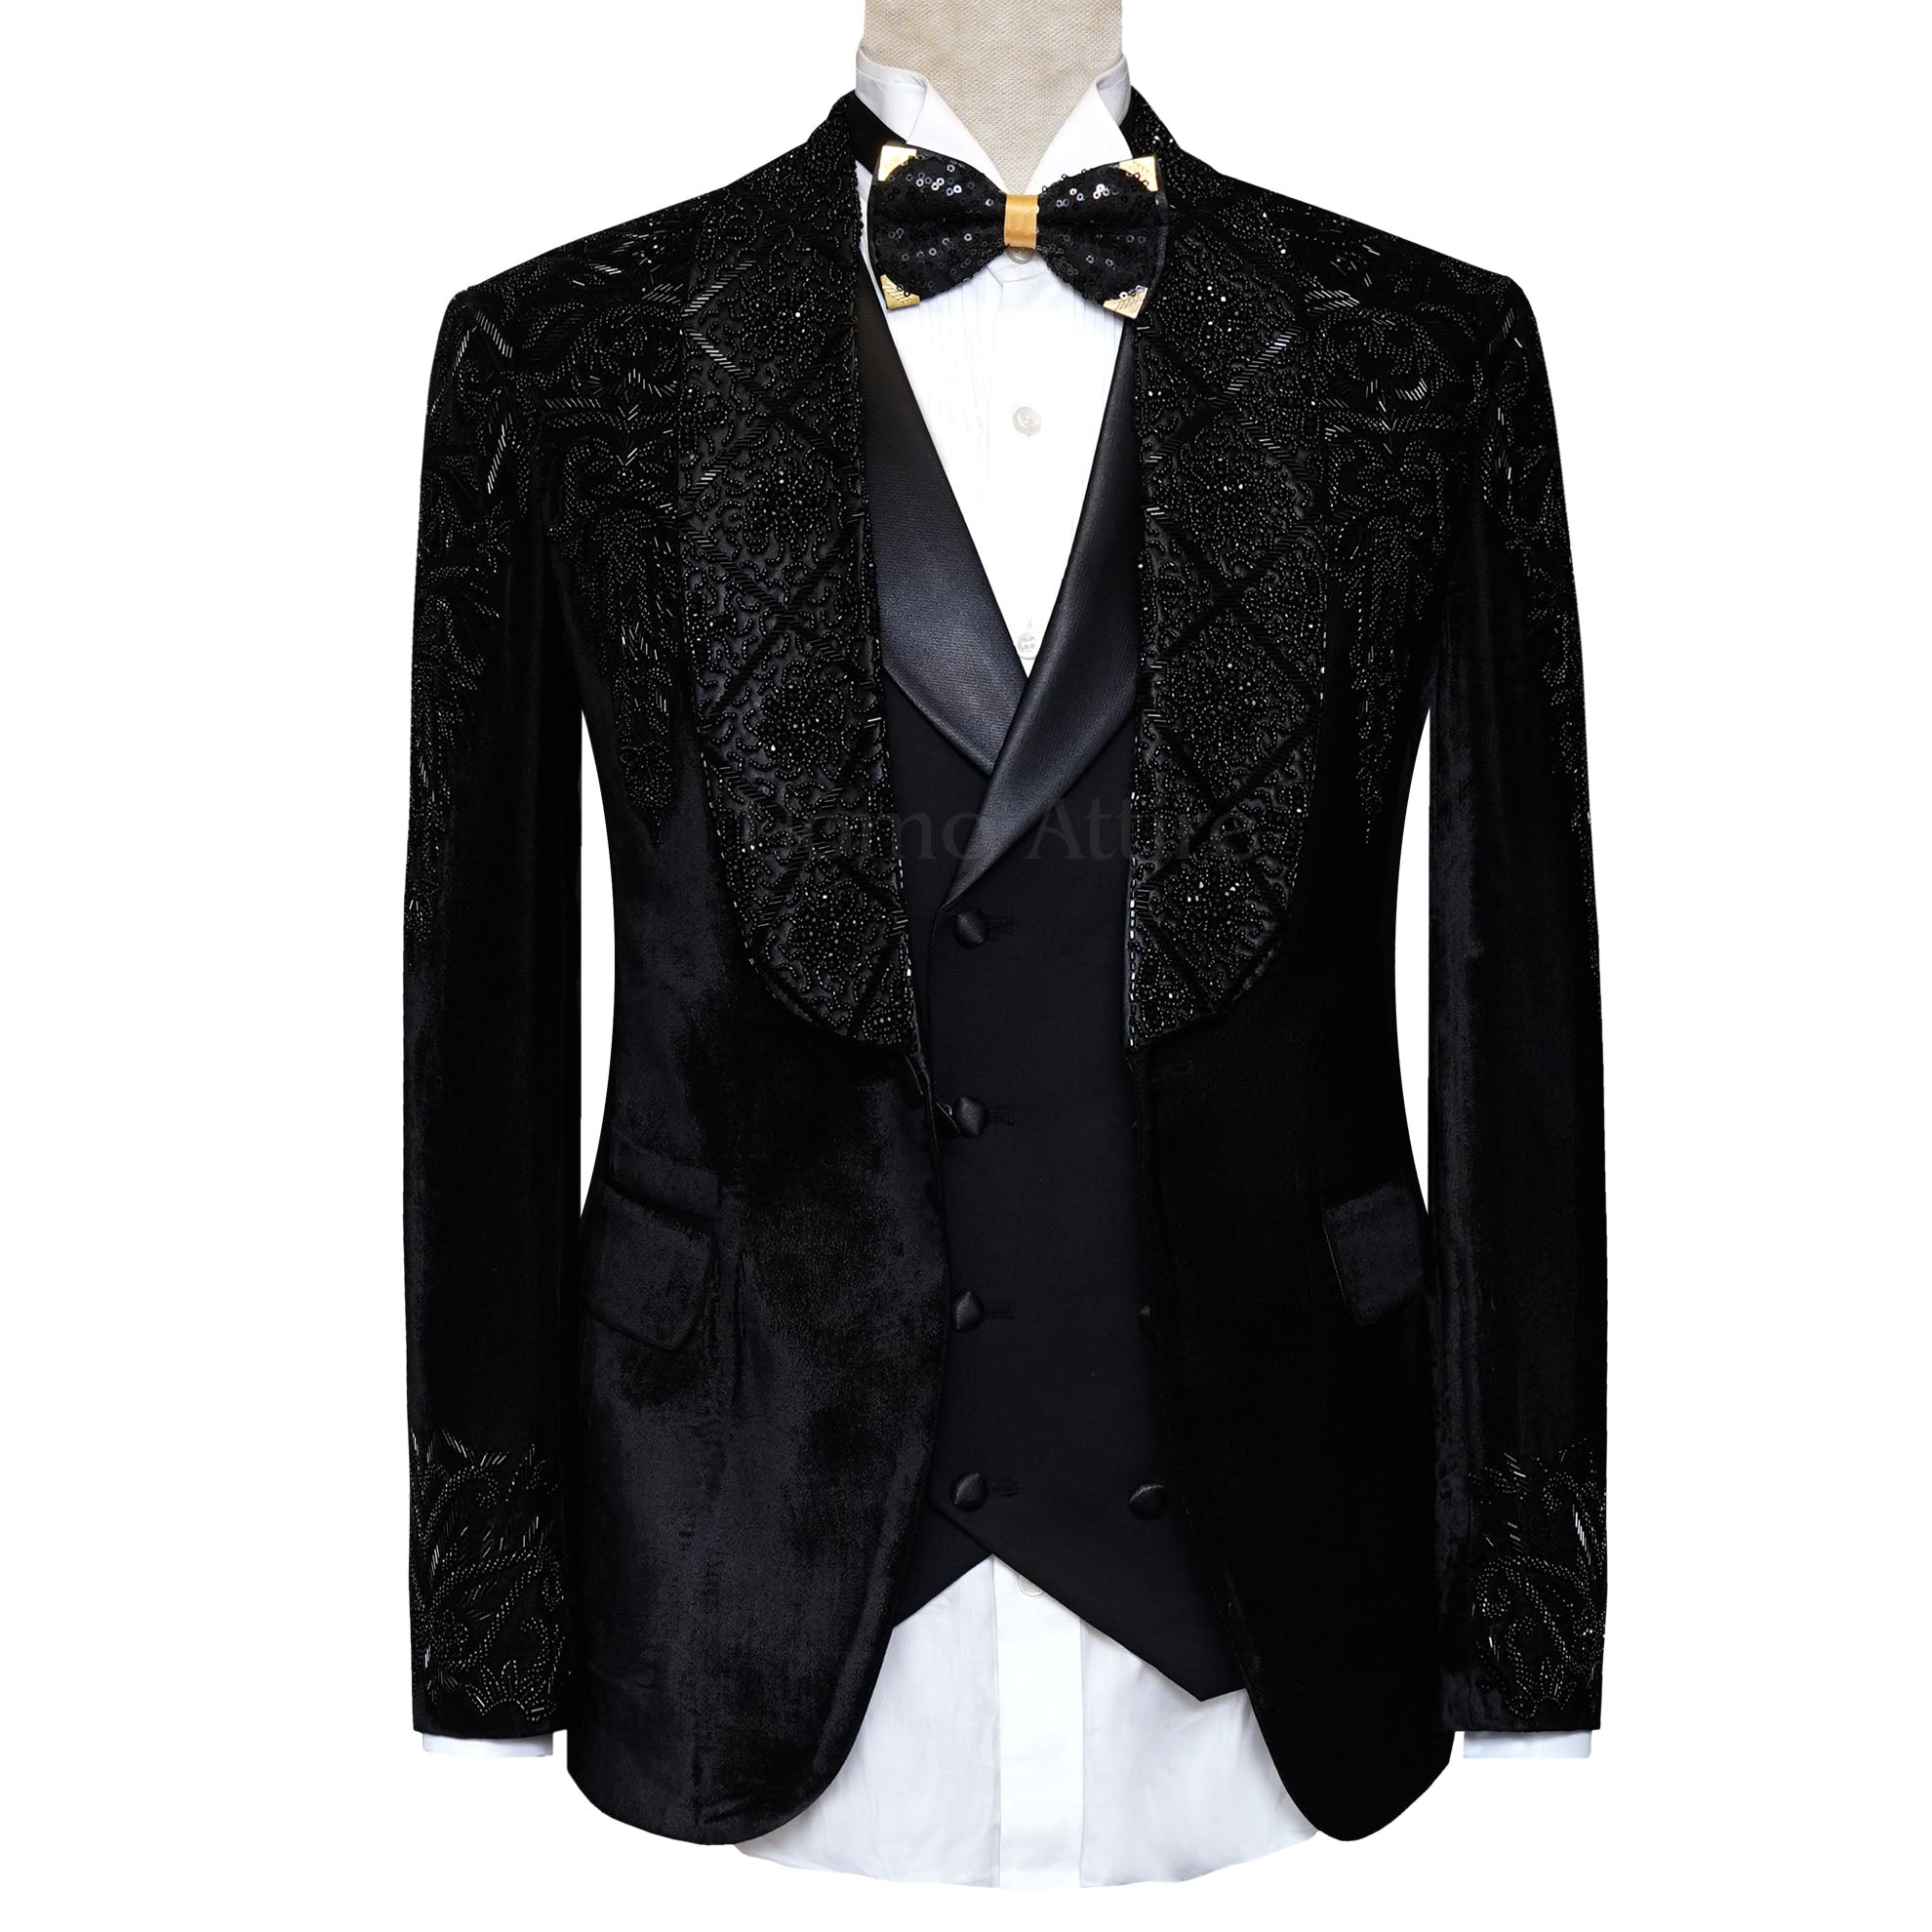 Black Shawl Collar Groom Tuxedo Suit